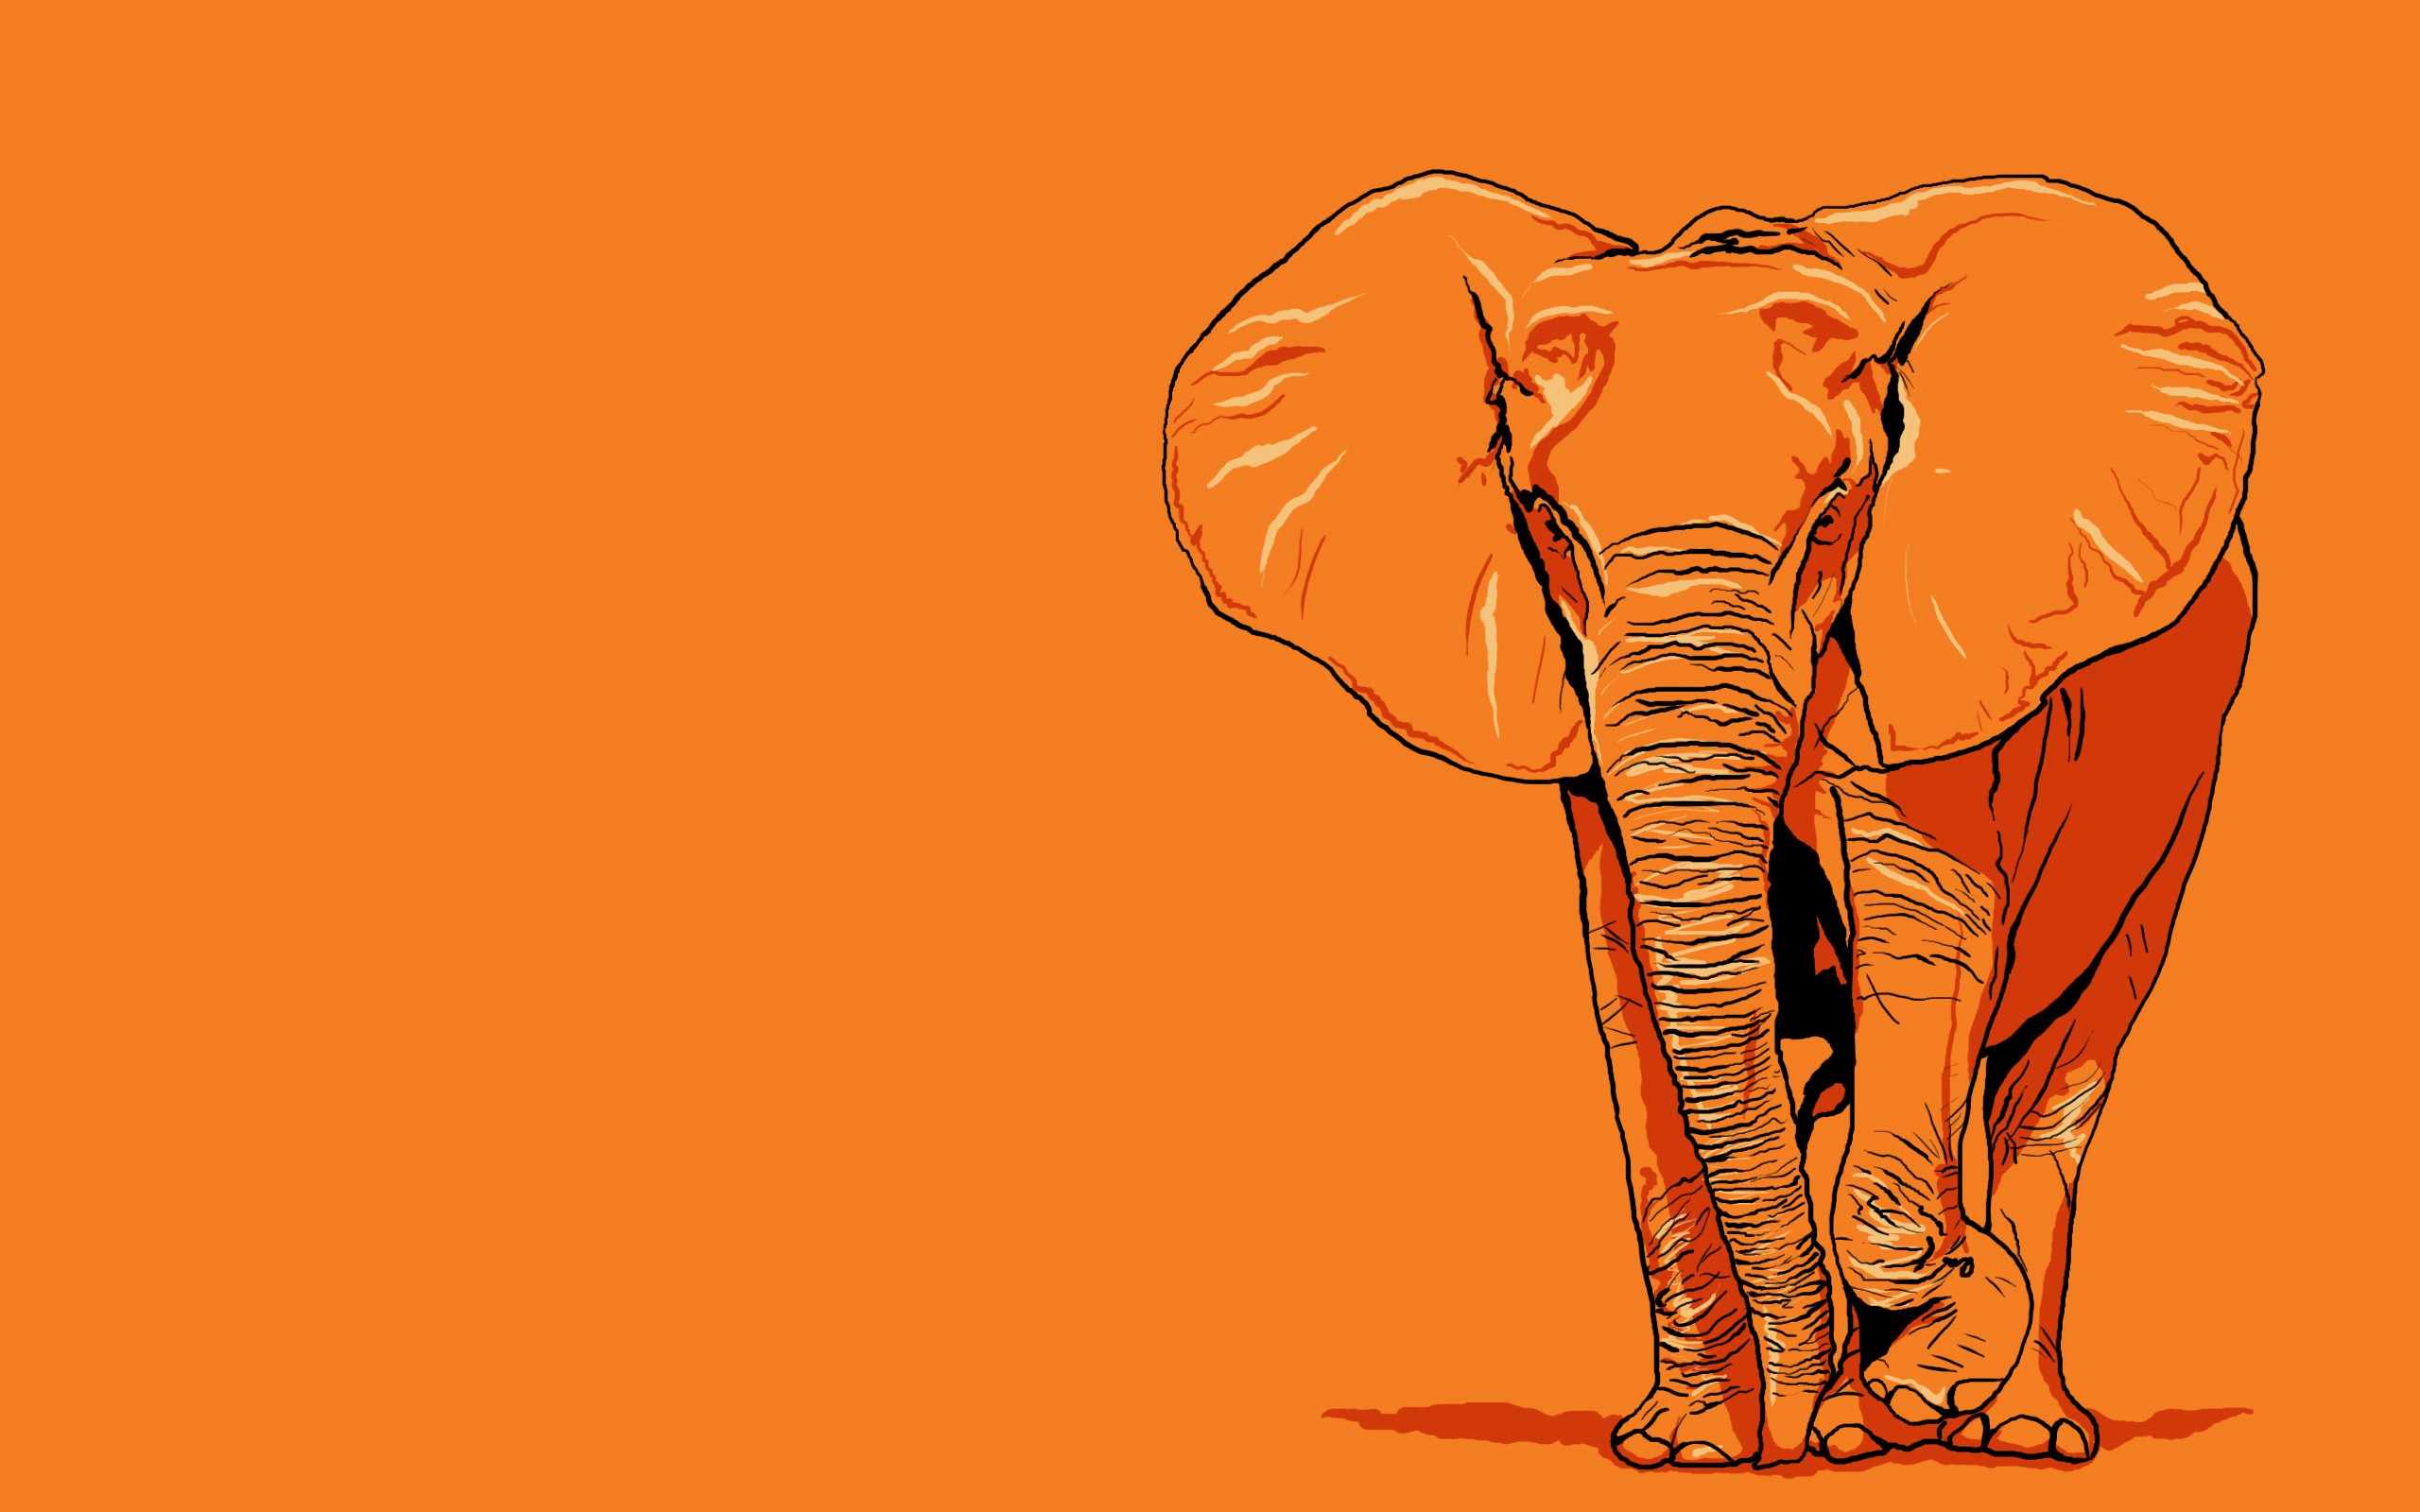 General 2560x1600 elephant artwork animals orange background mammals orange digital art simple background